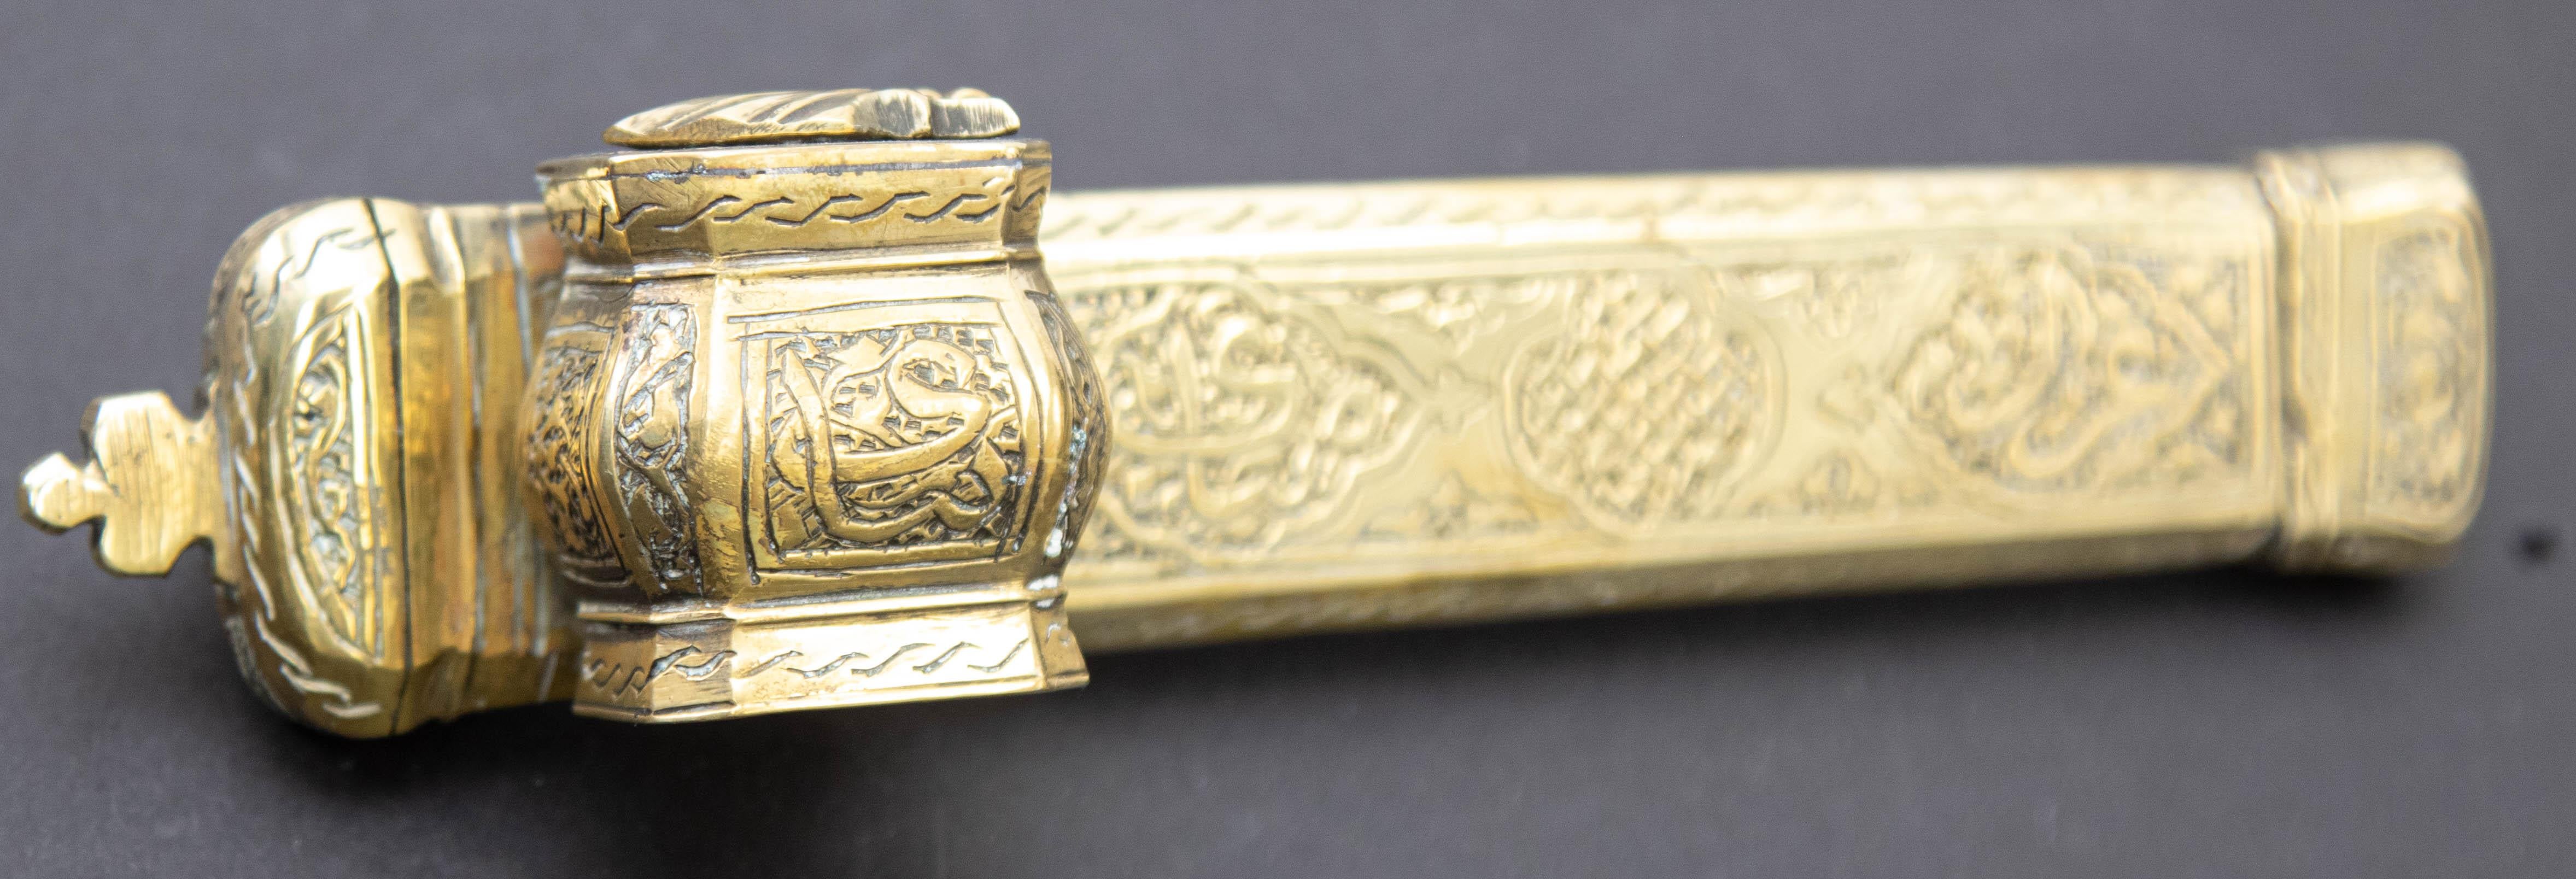 Antique Ottoman Turkish Brass Inkwell Qalamdan with Arabic Calligraphy Writing For Sale 9